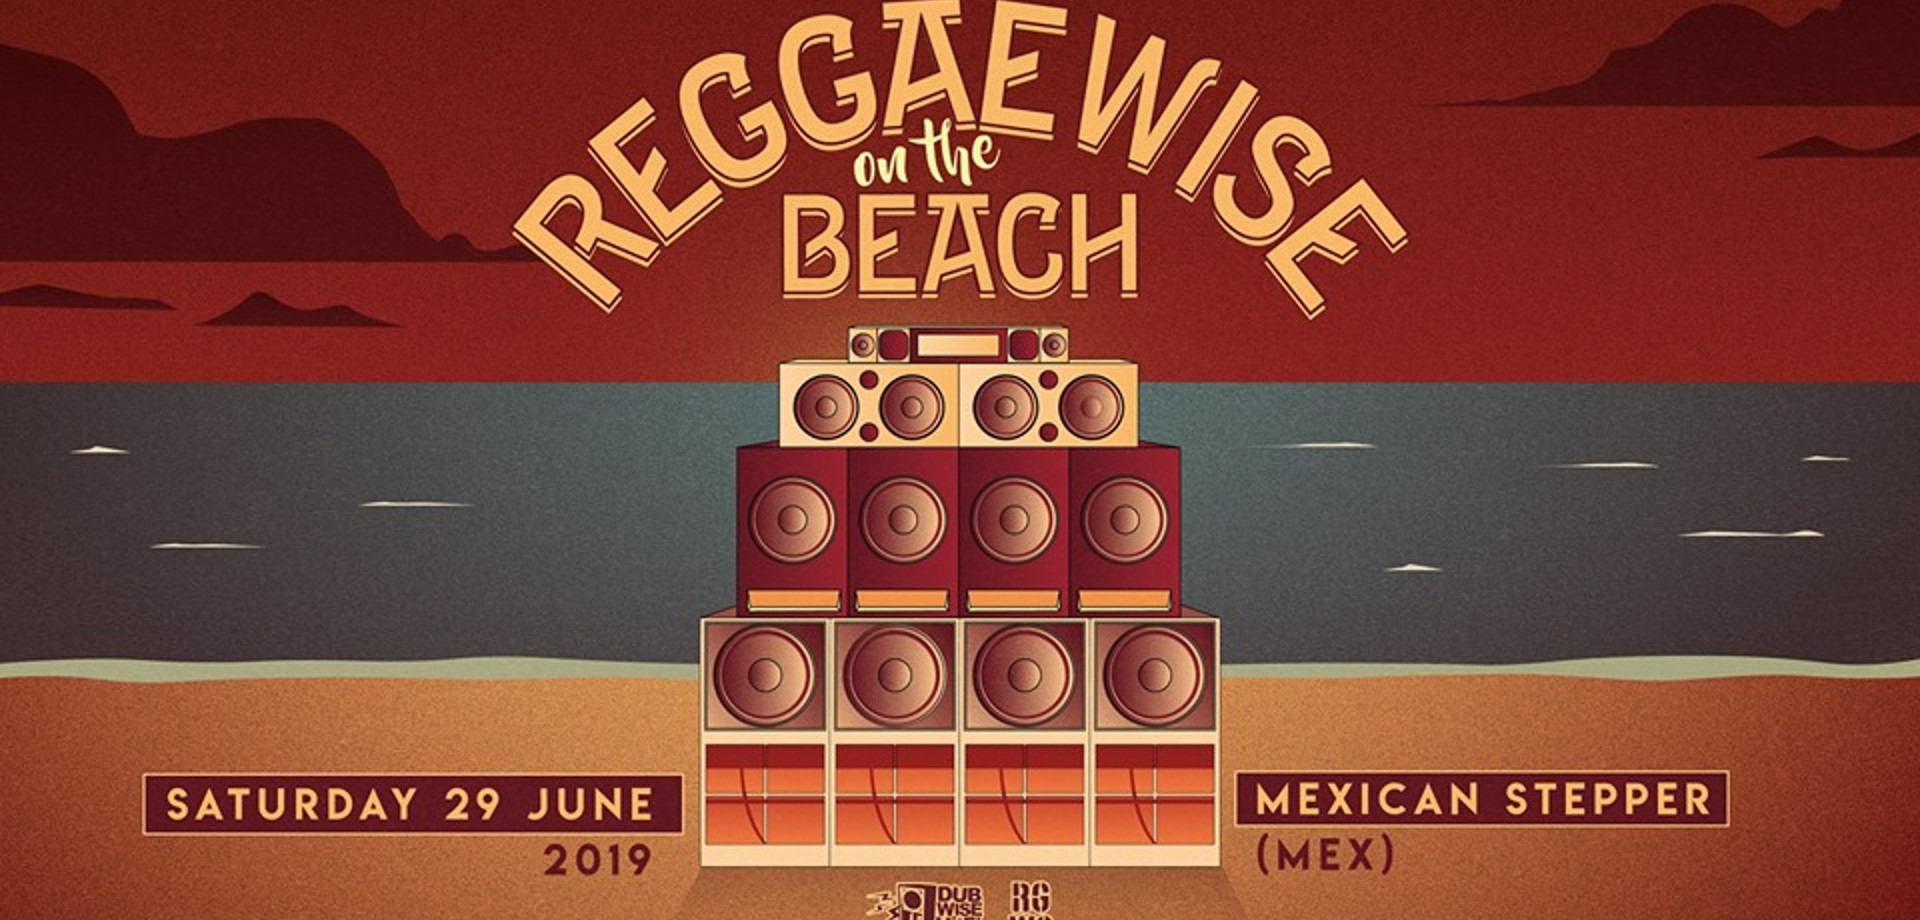 Reggaewise on the Beach